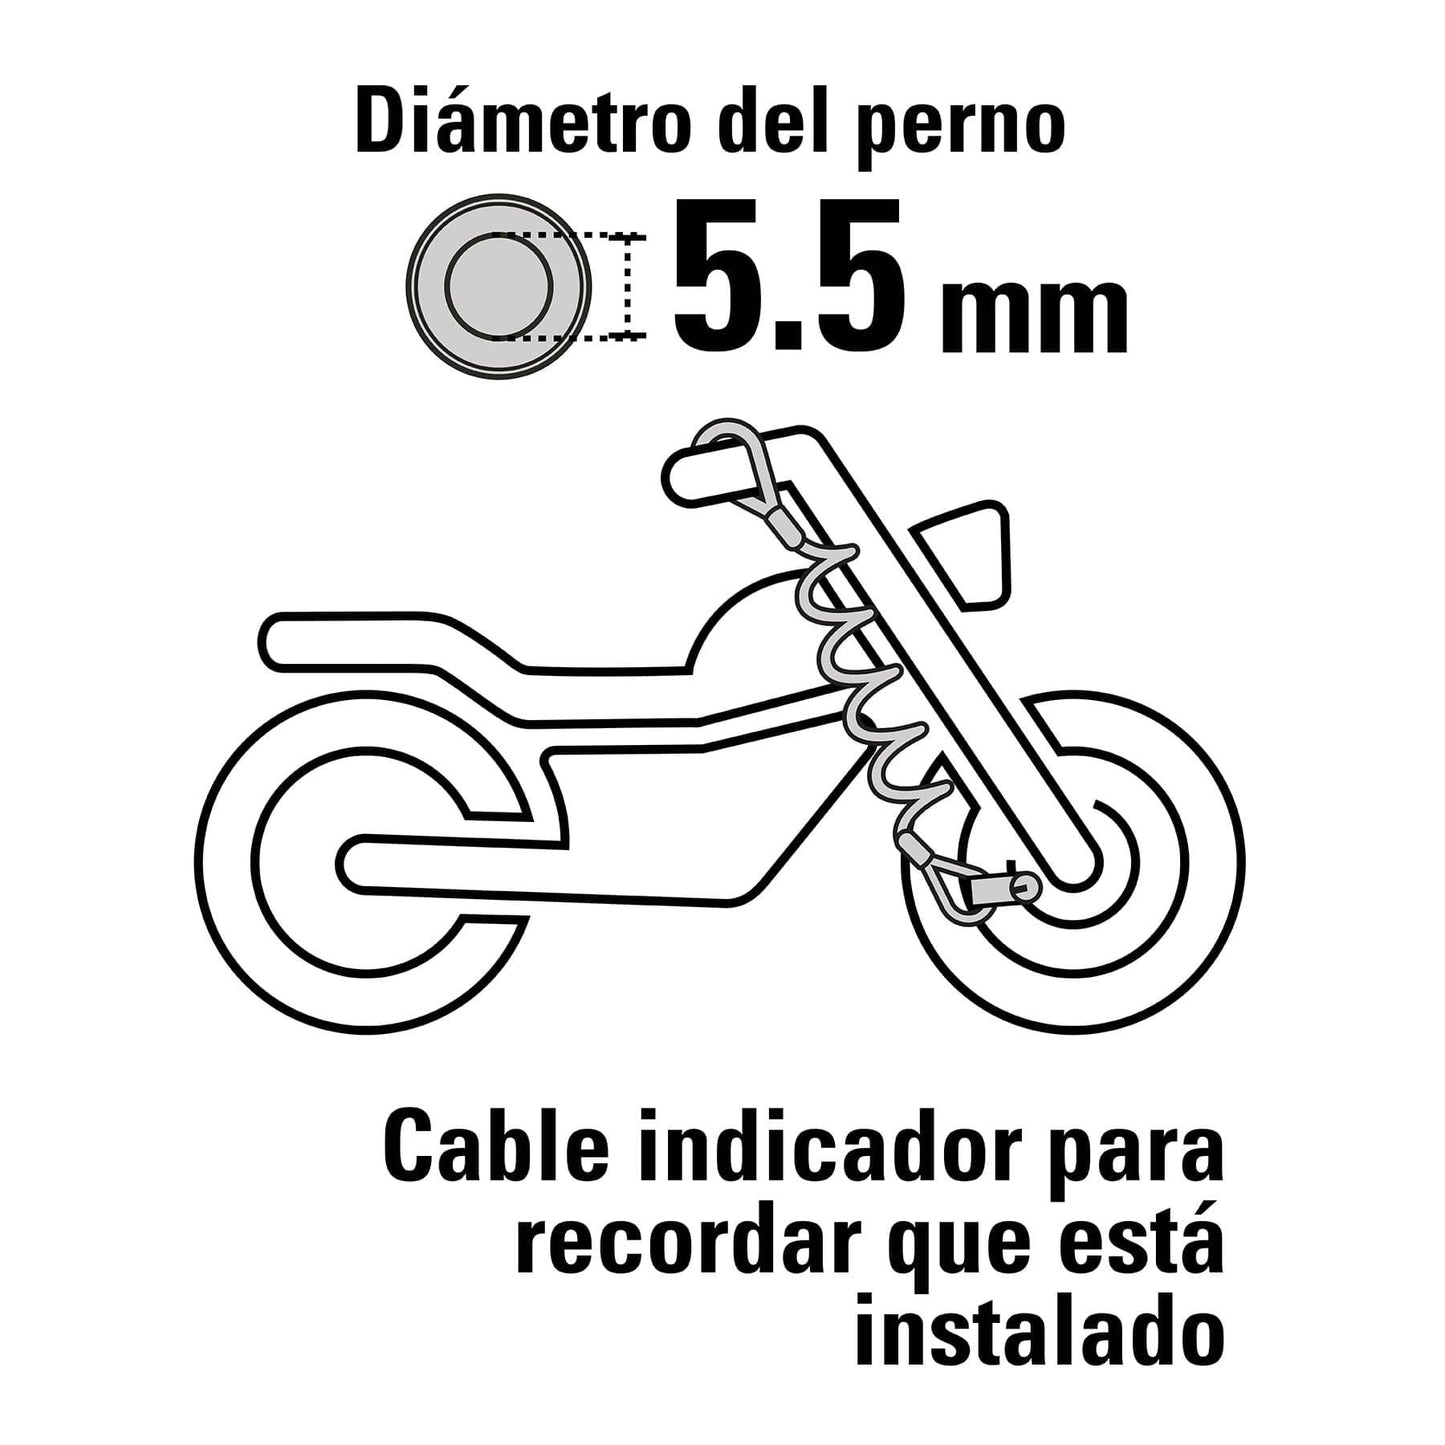 Candado para disco de motocicleta, perno de 5.5 mm